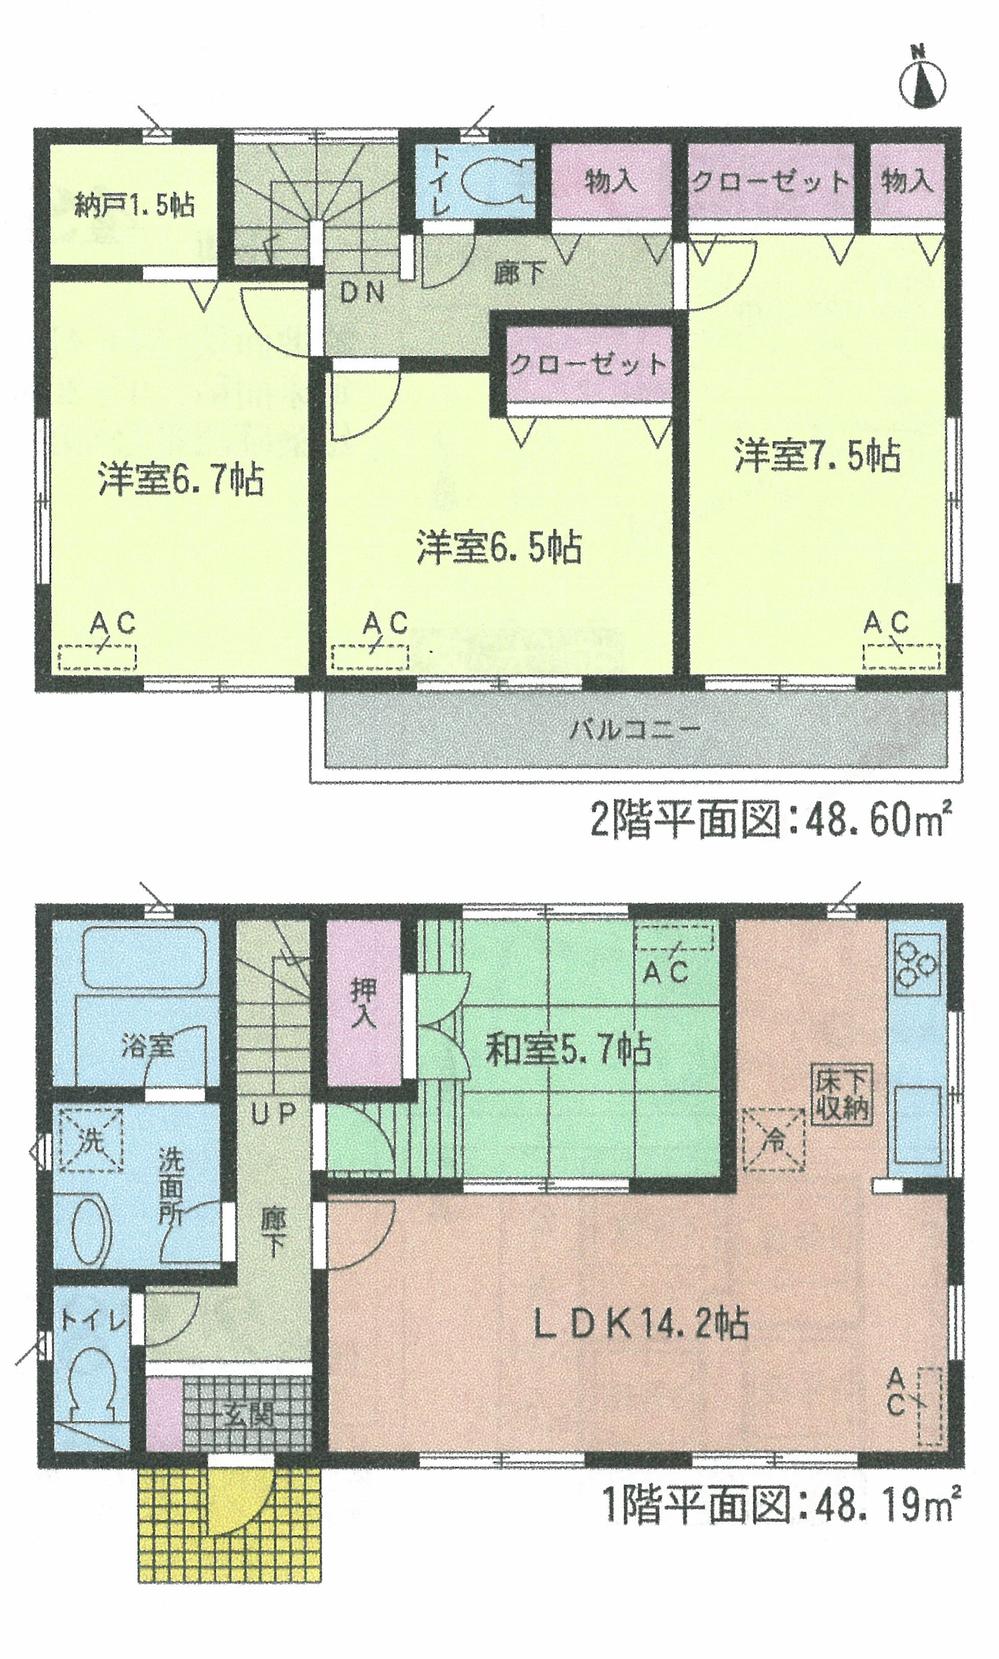 Floor plan. (4 Building), Price 19.9 million yen, 4LDK+S, Land area 117.07 sq m , Building area 96.79 sq m